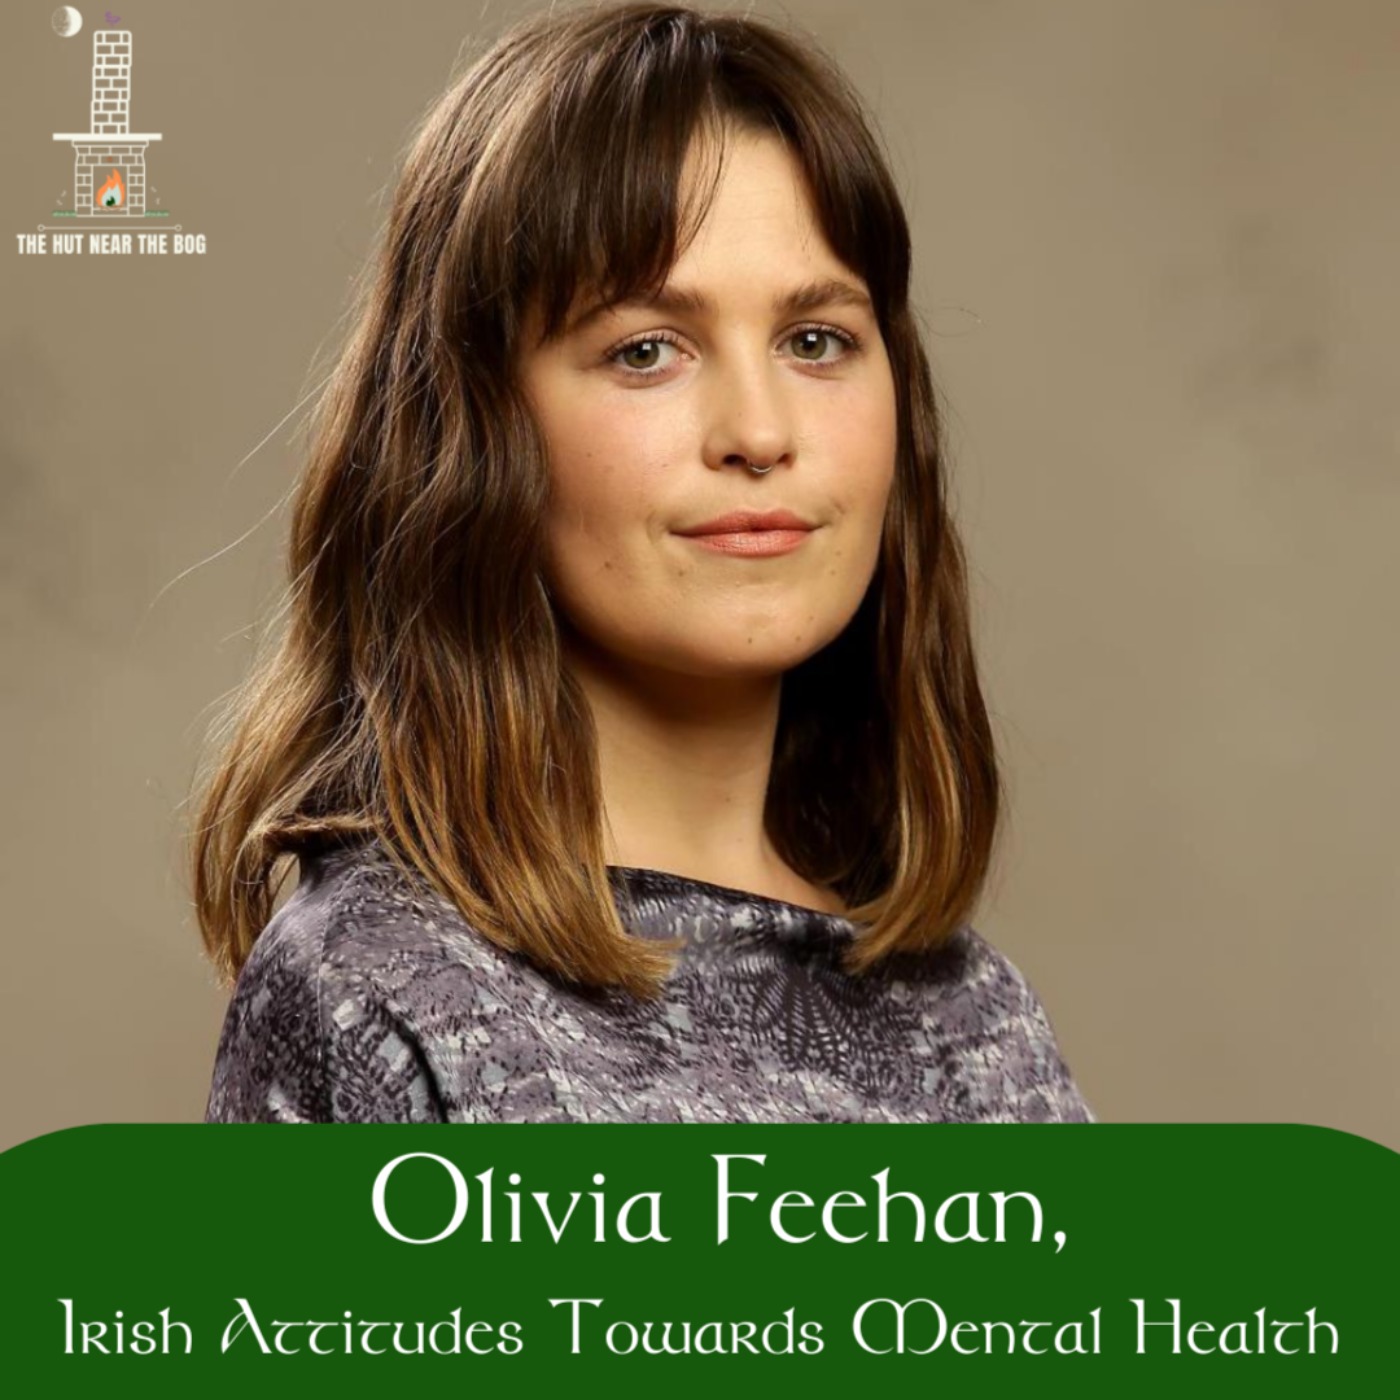 Olivia Feehan, Irish Attitudes Towards Mental Health